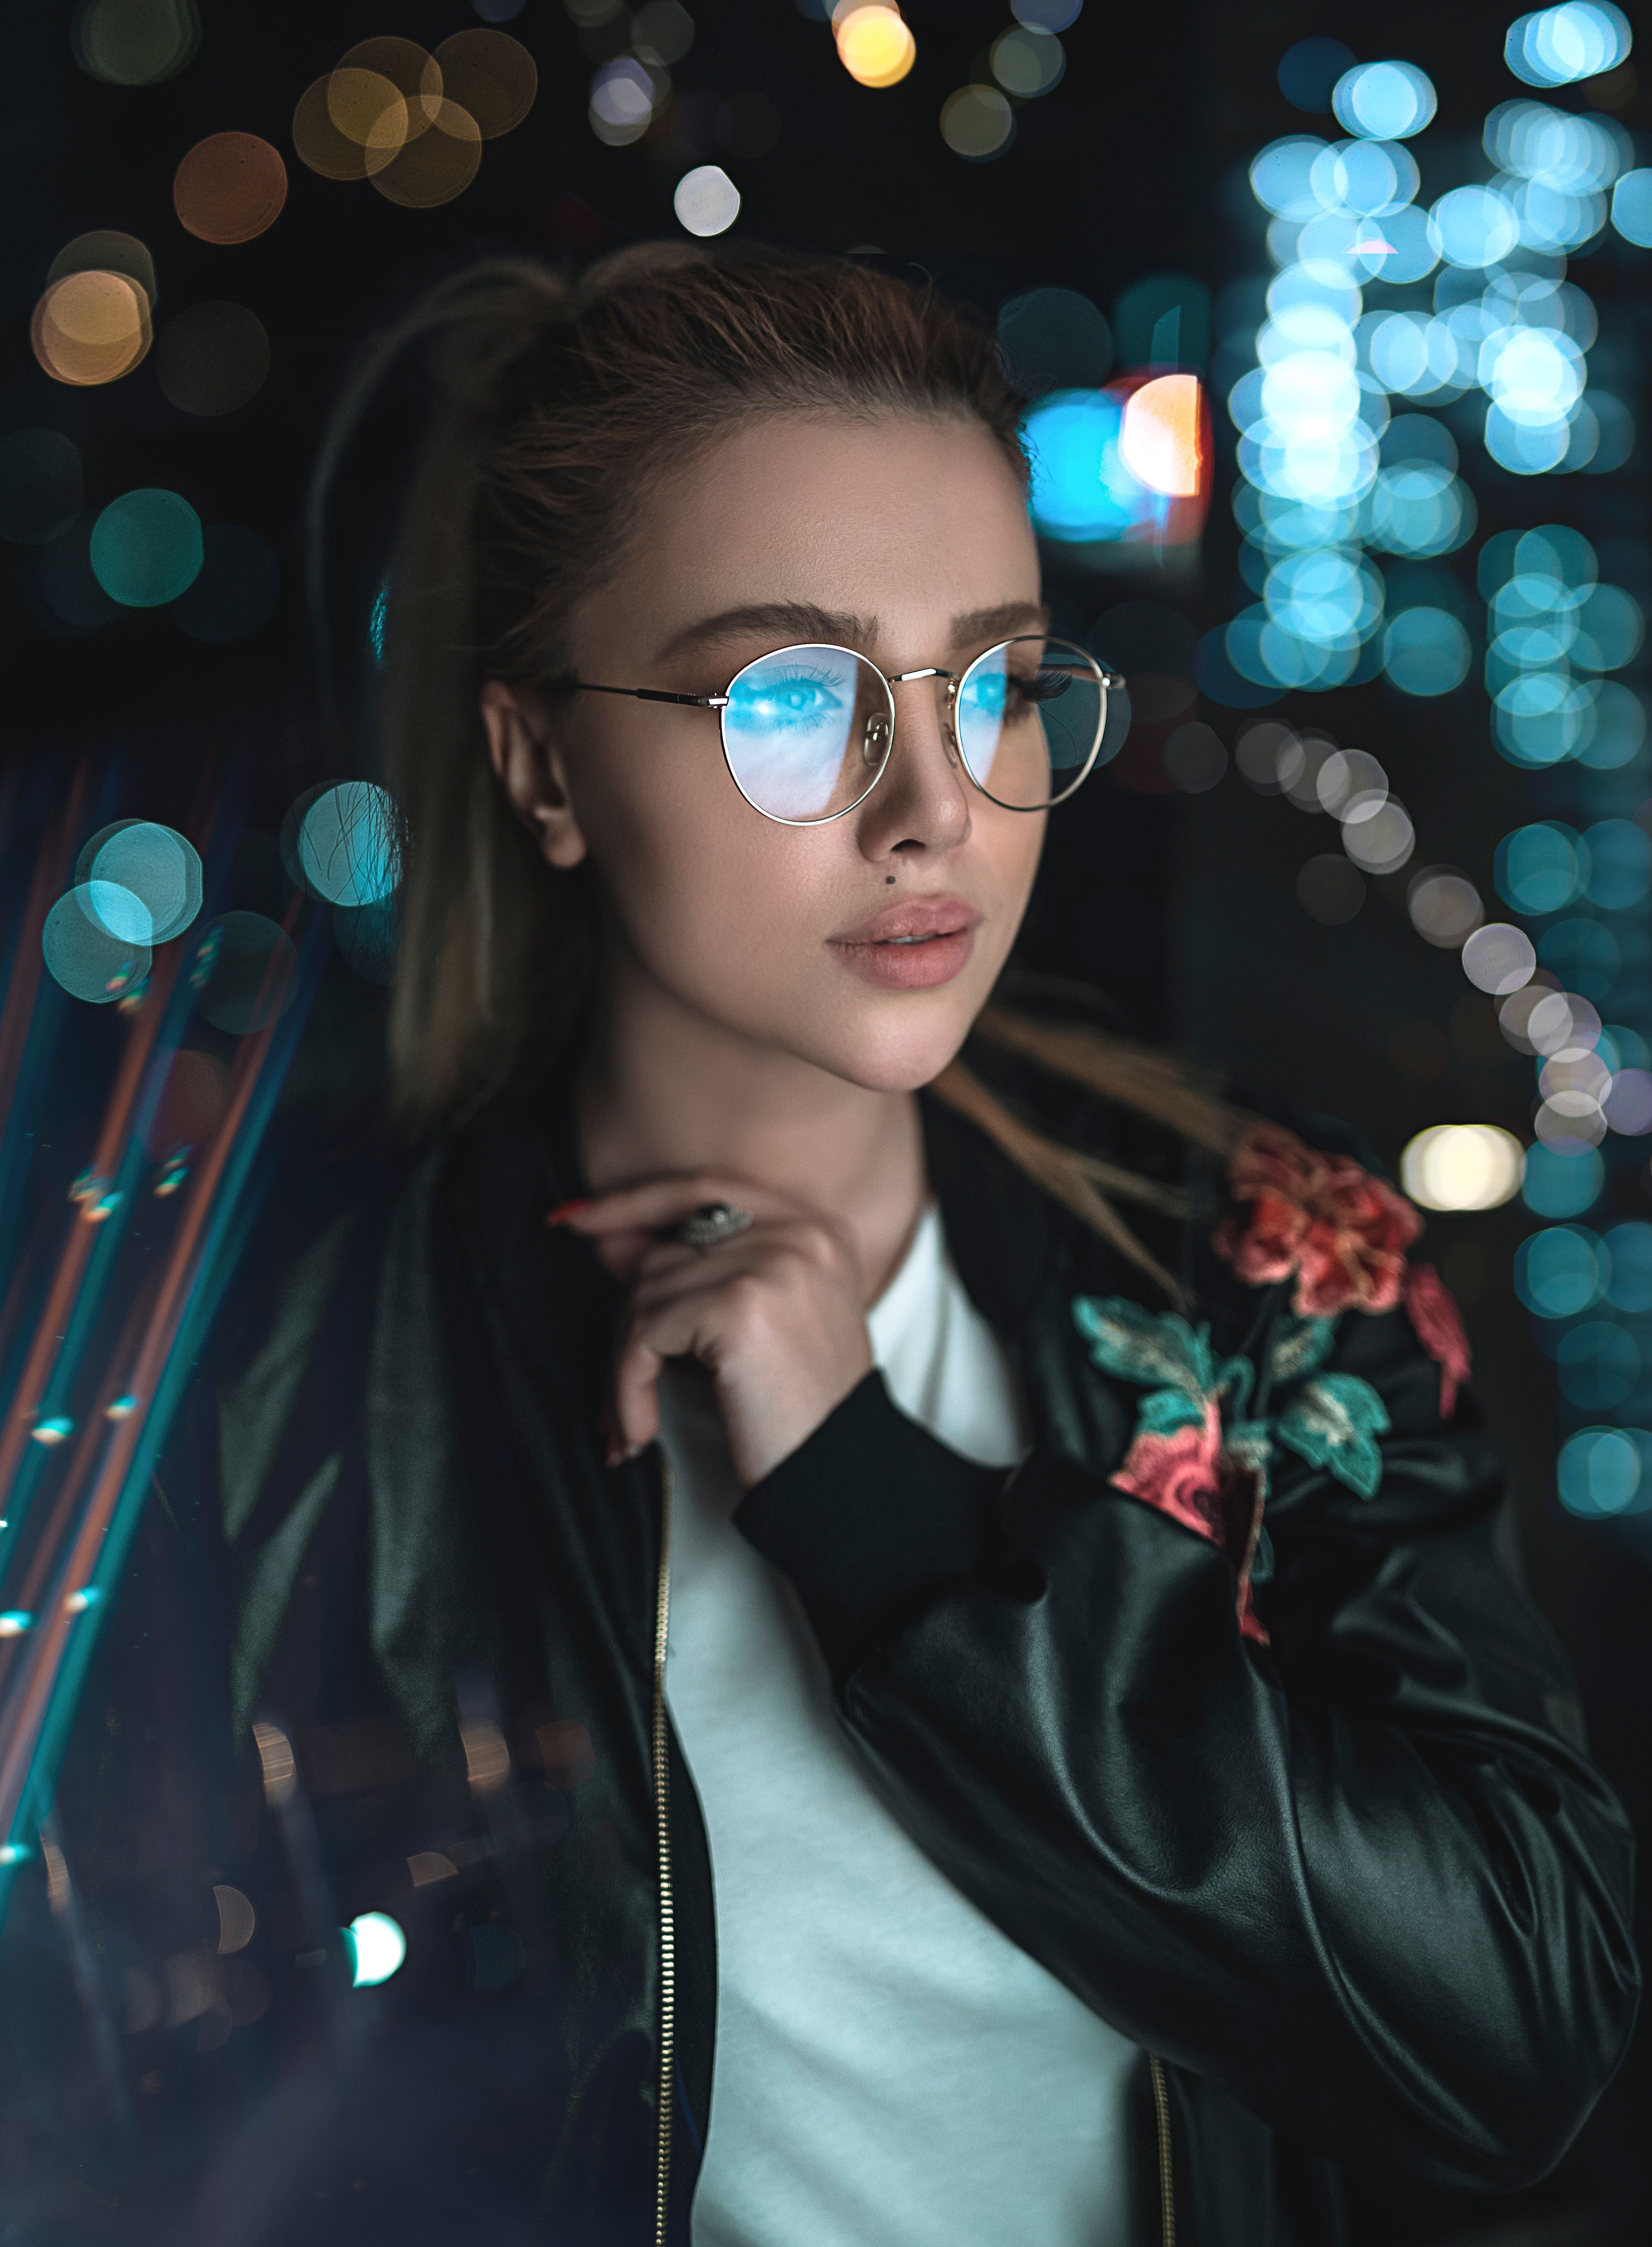 Photo by ali pazani, girl, ponytail, glasses, embroidery, black jacket, city lights. Брендинг фотографии, Ночная фотография, Круглые лица